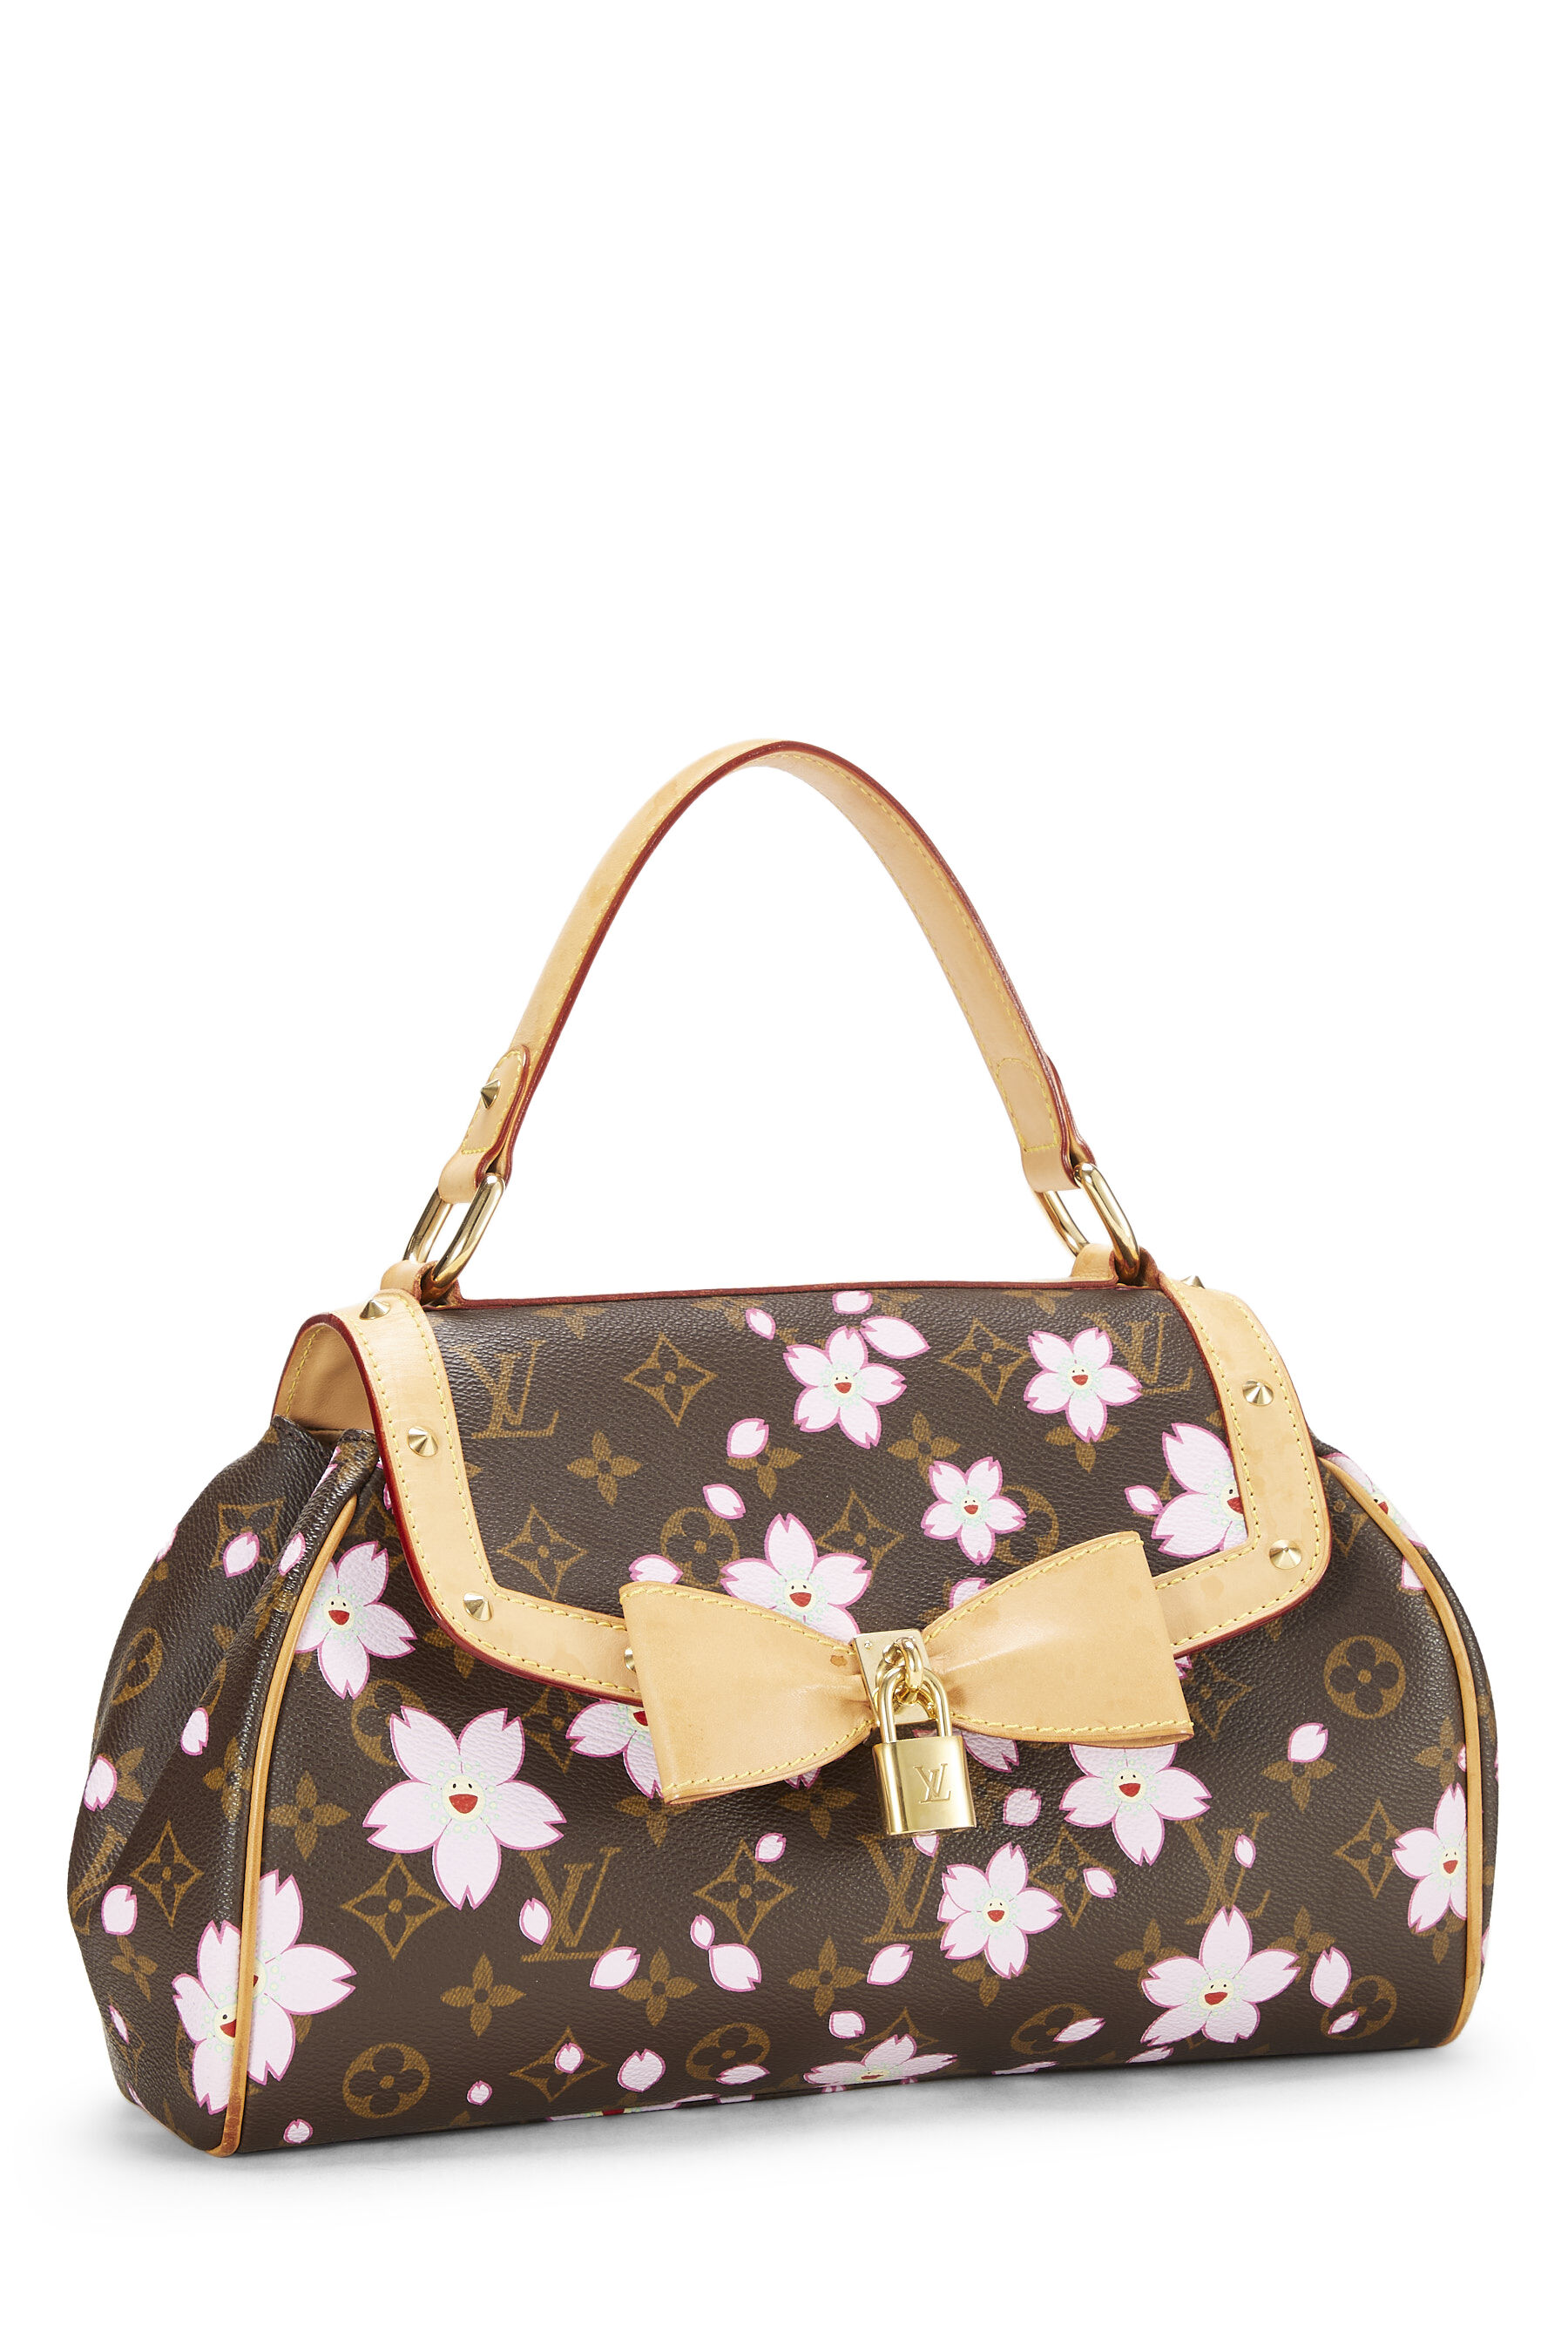 Louis Vuitton x Takashi Murakami Cherry Blossom Sac Retro Bag, myGemma, JP